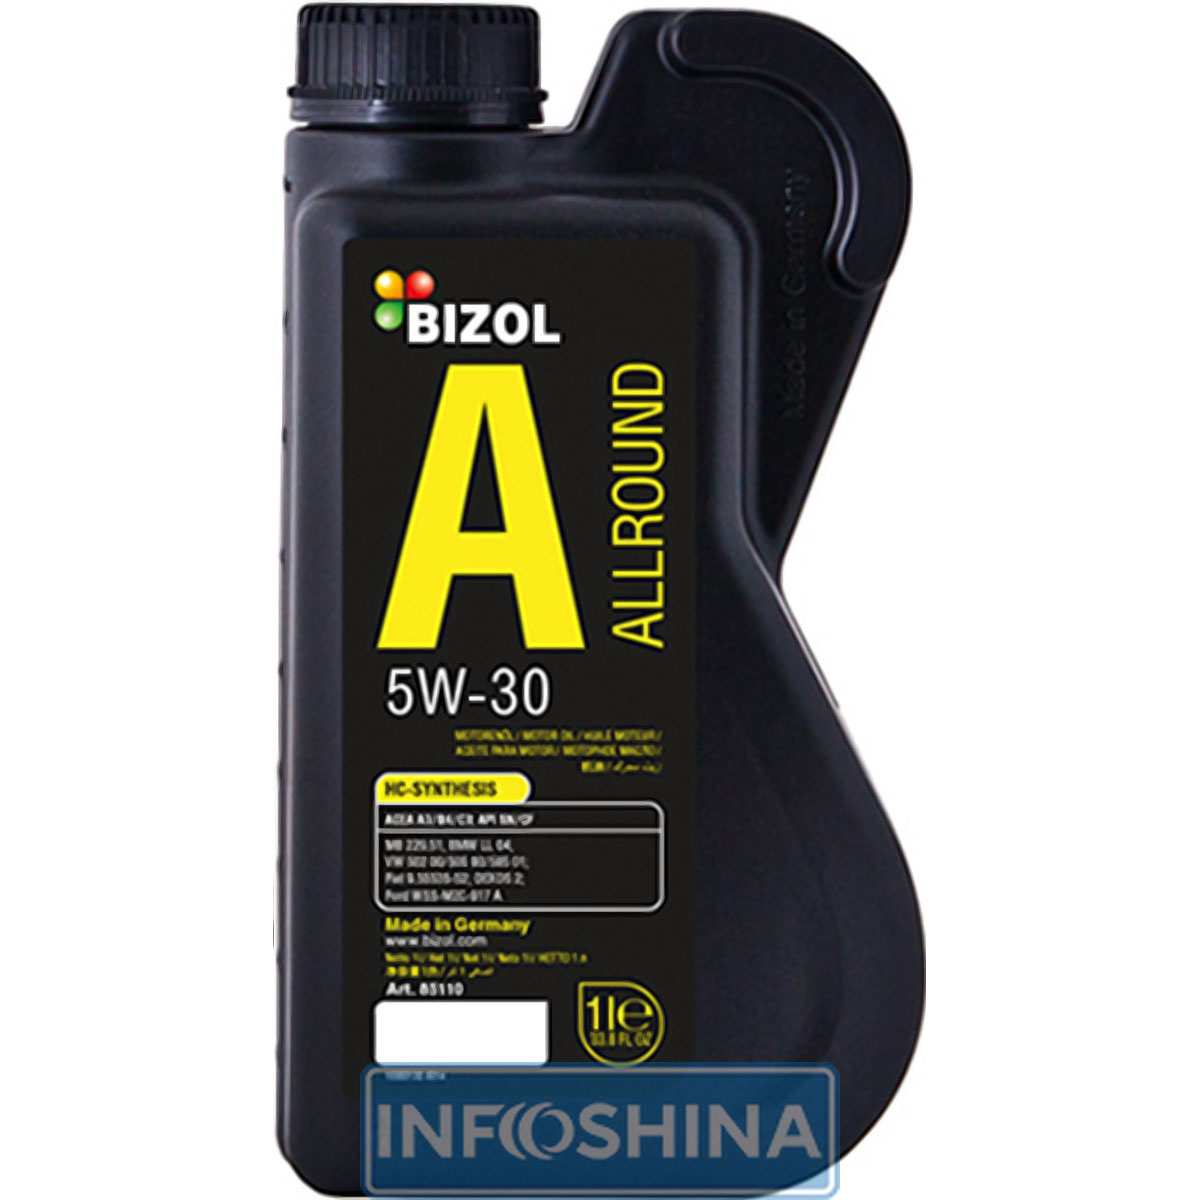 Купить масло Bizol Allround 5W-30 (1л)